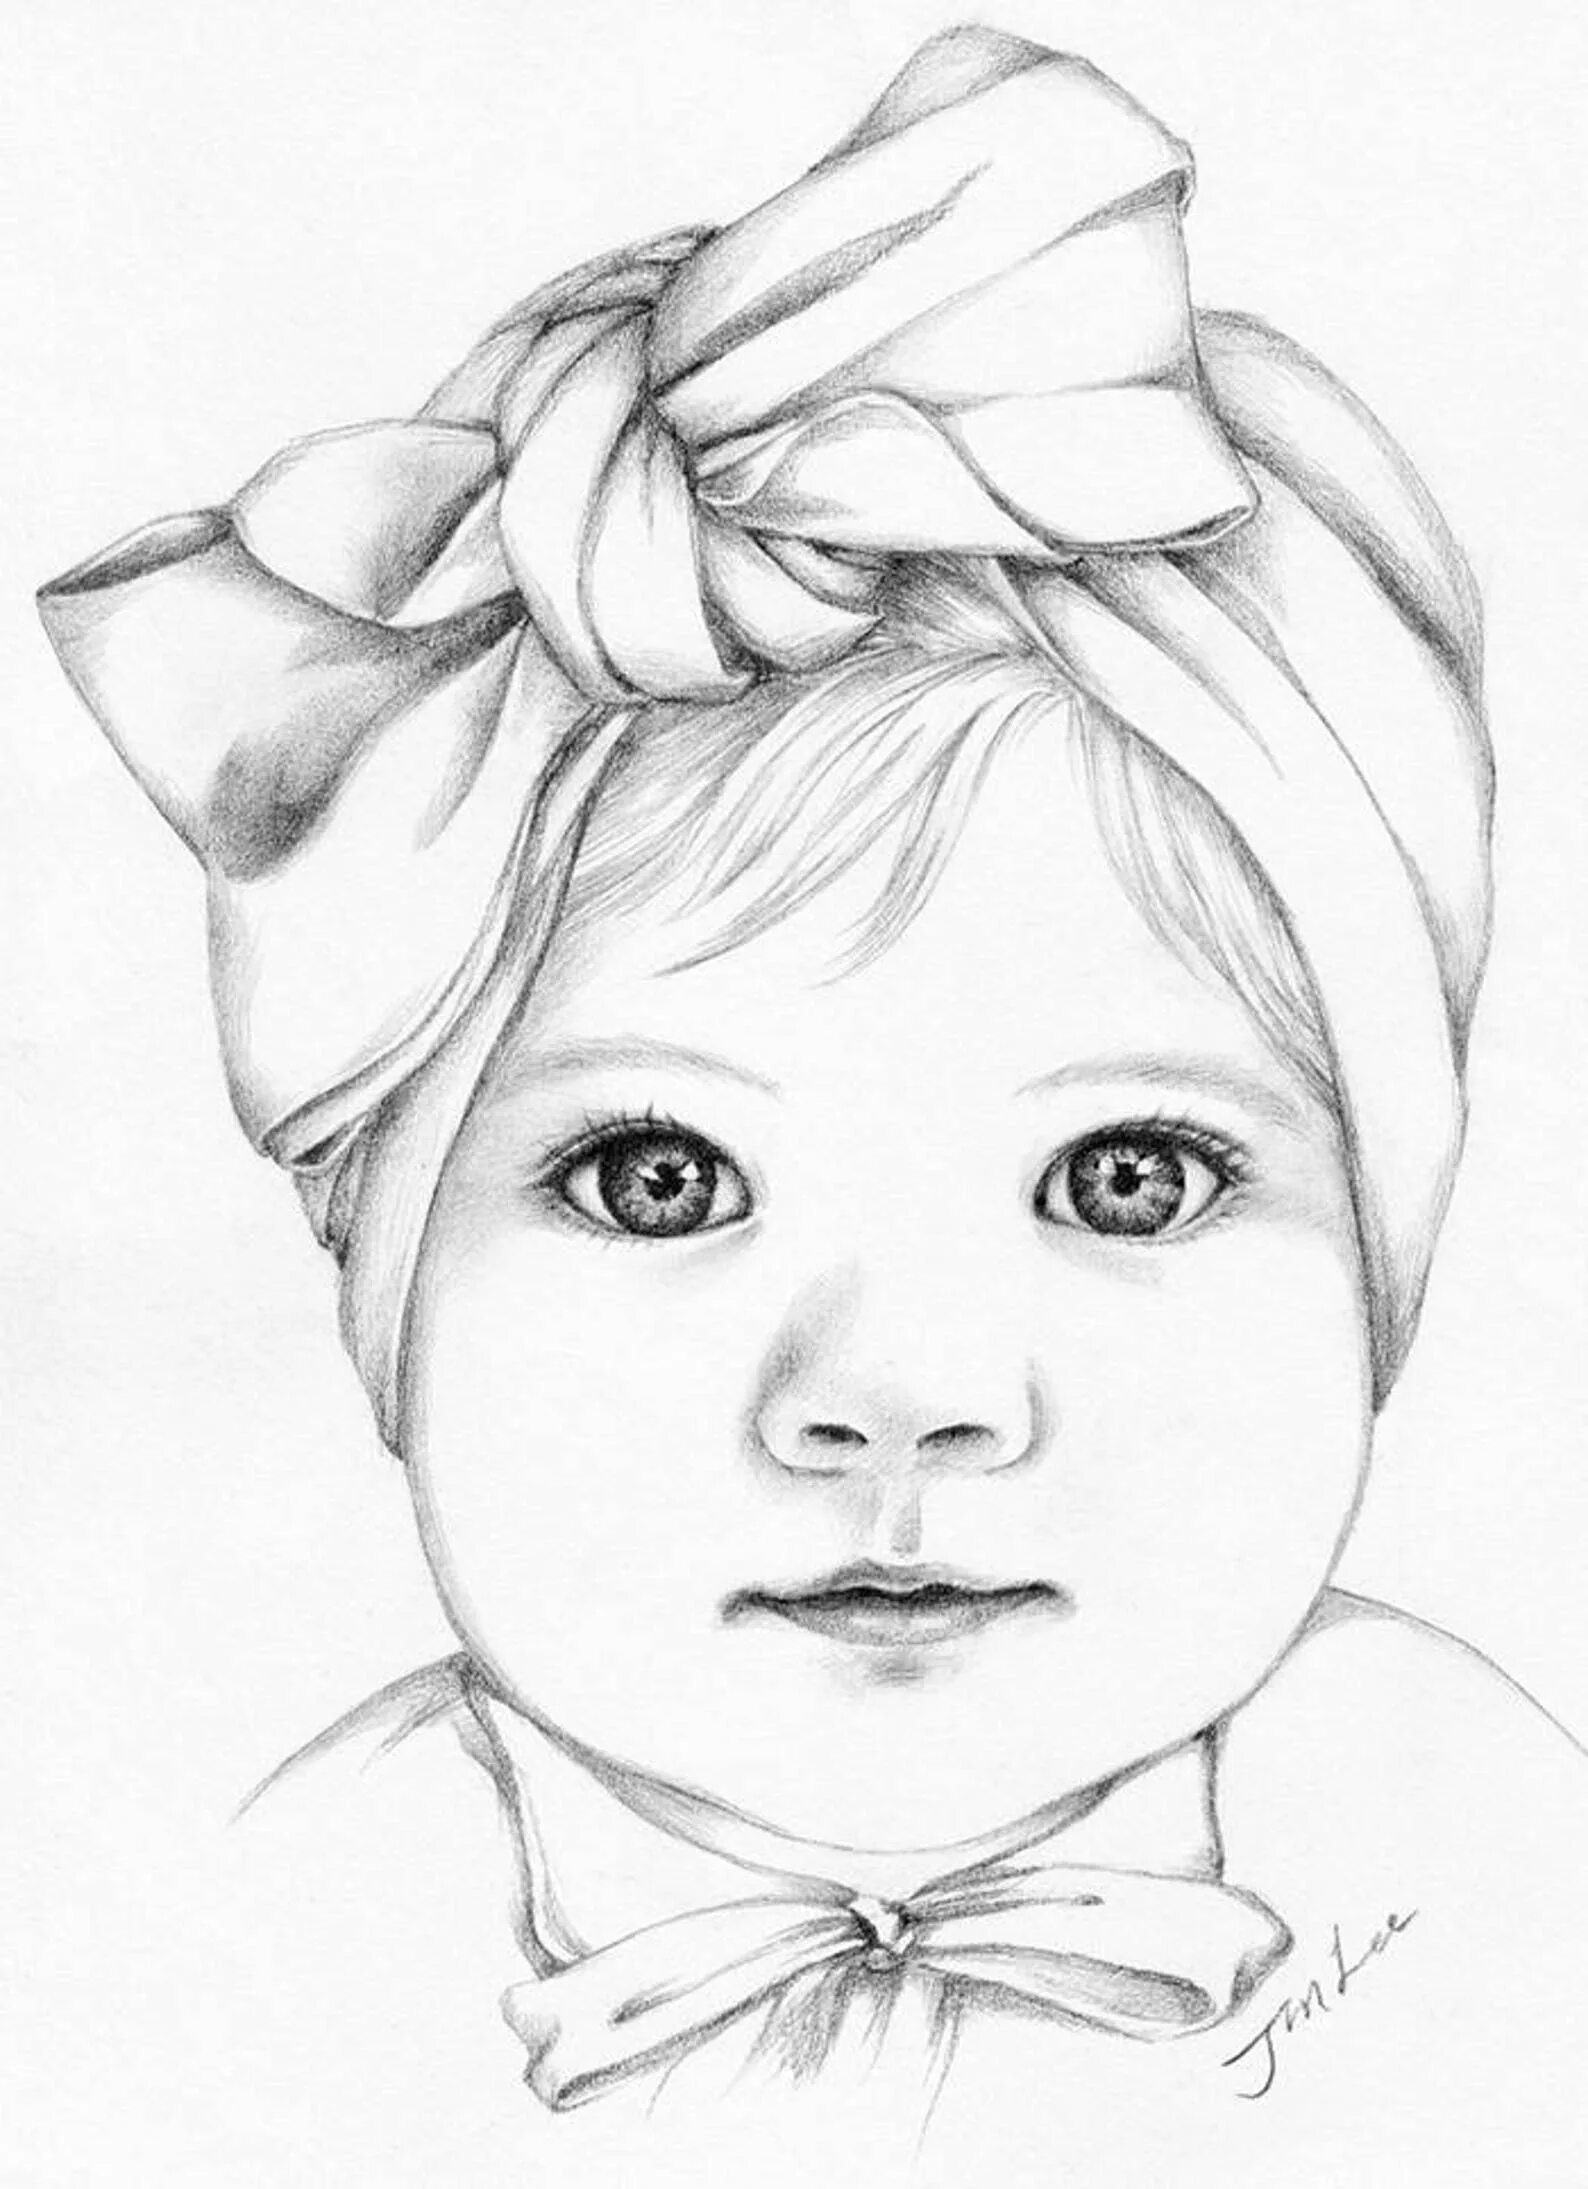 Ребенок карандашом. Портрет девочки. Портрет ребенка карандашом. Портрет ребенка карандашом для срисовки. Портрет девочкикарандашем.